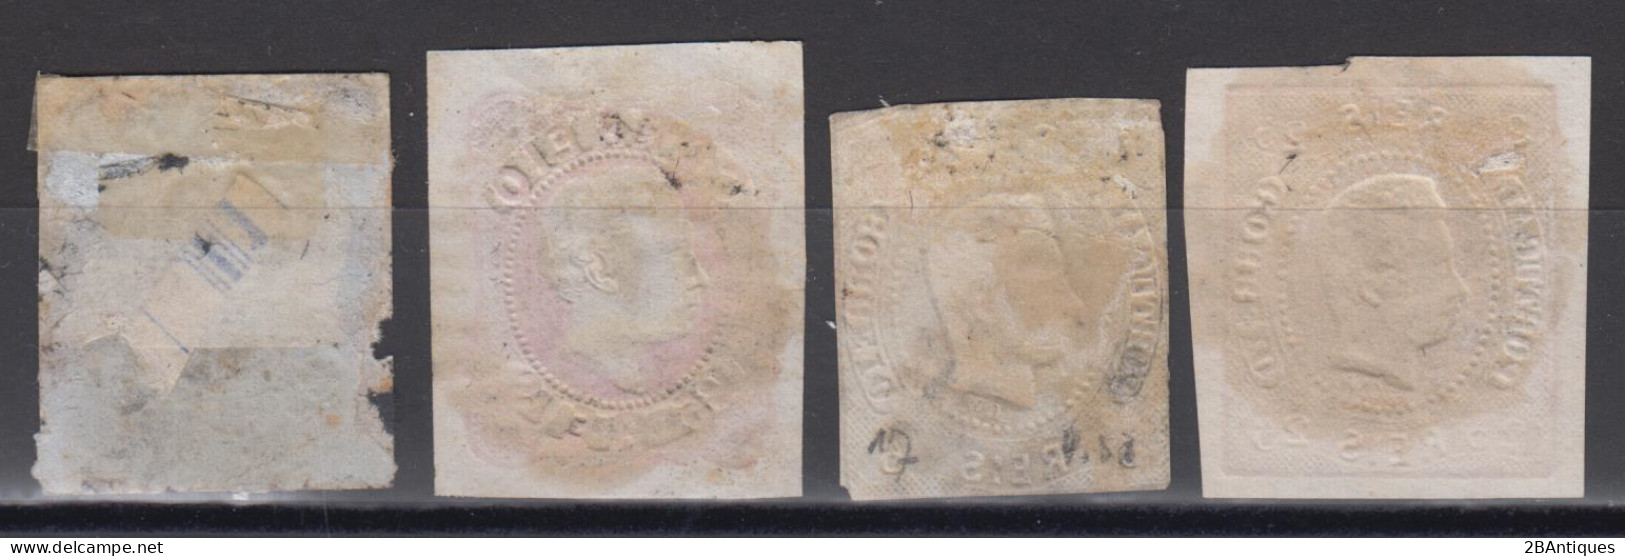 Portugal - 4 Early Stamps - Usado